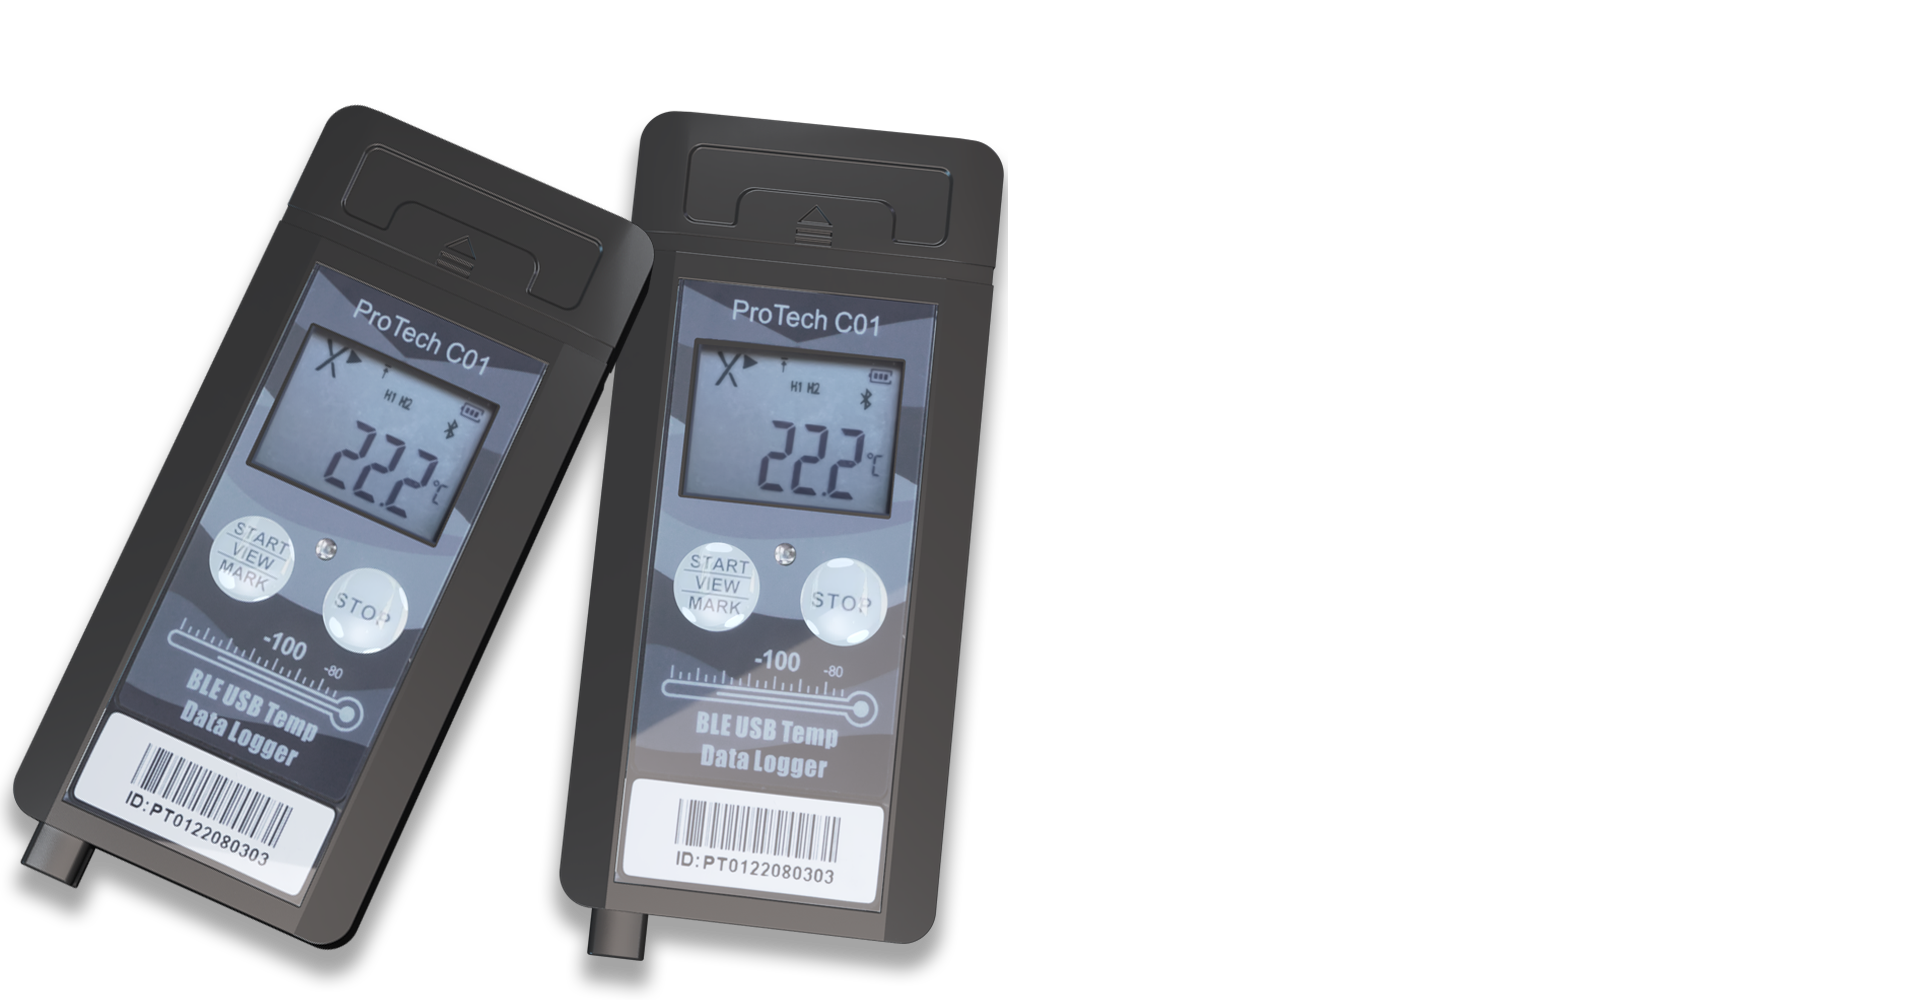 Rejestrator temperatury ProTech C01